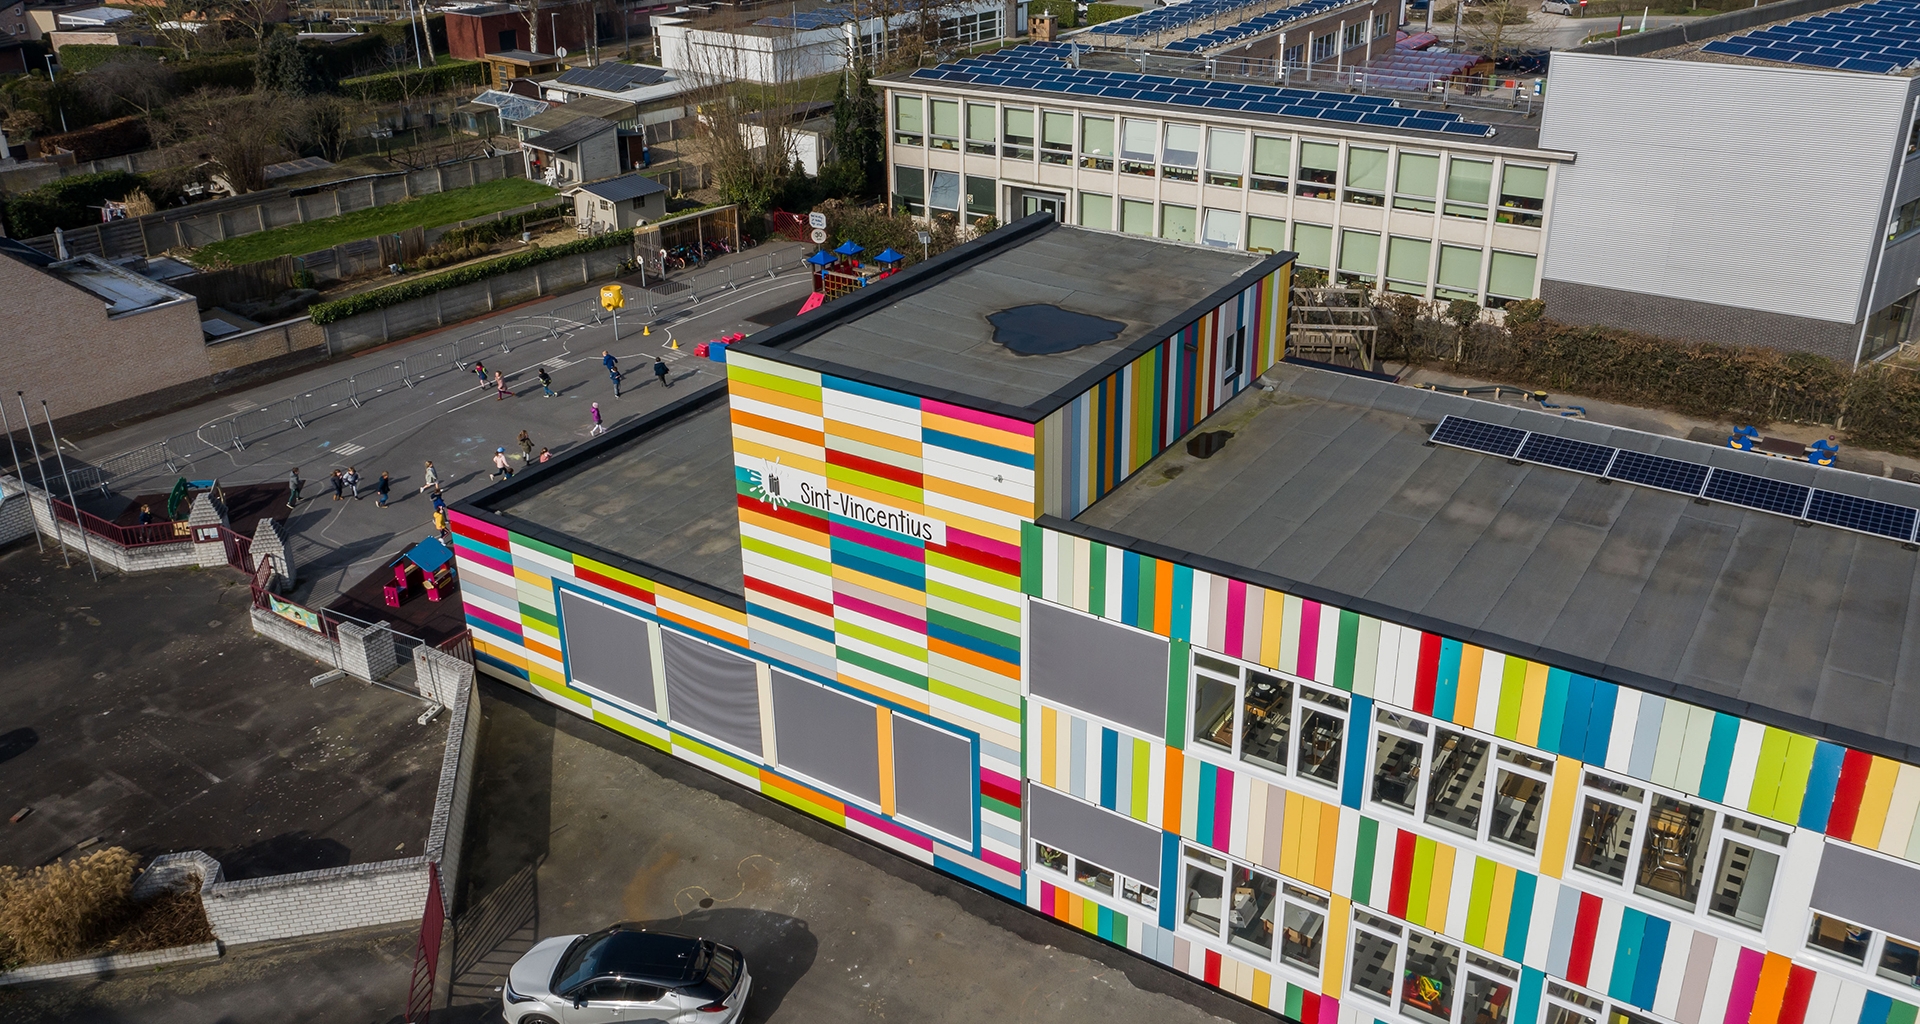 Buggenhout school HPL panel facade cladding 